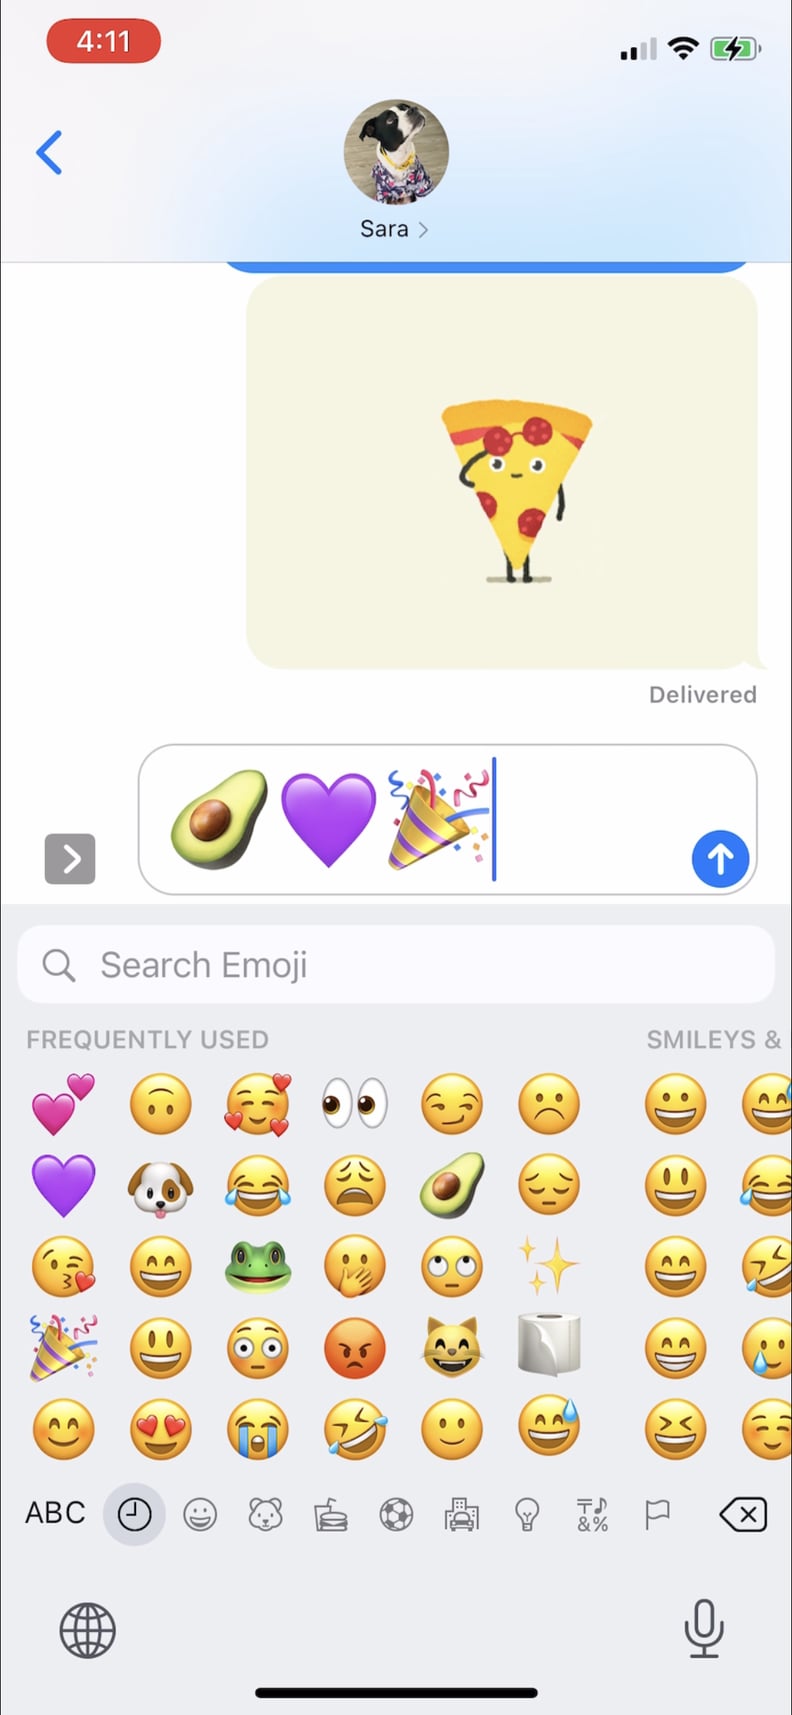 Step 1: Choose Your Three Emoji